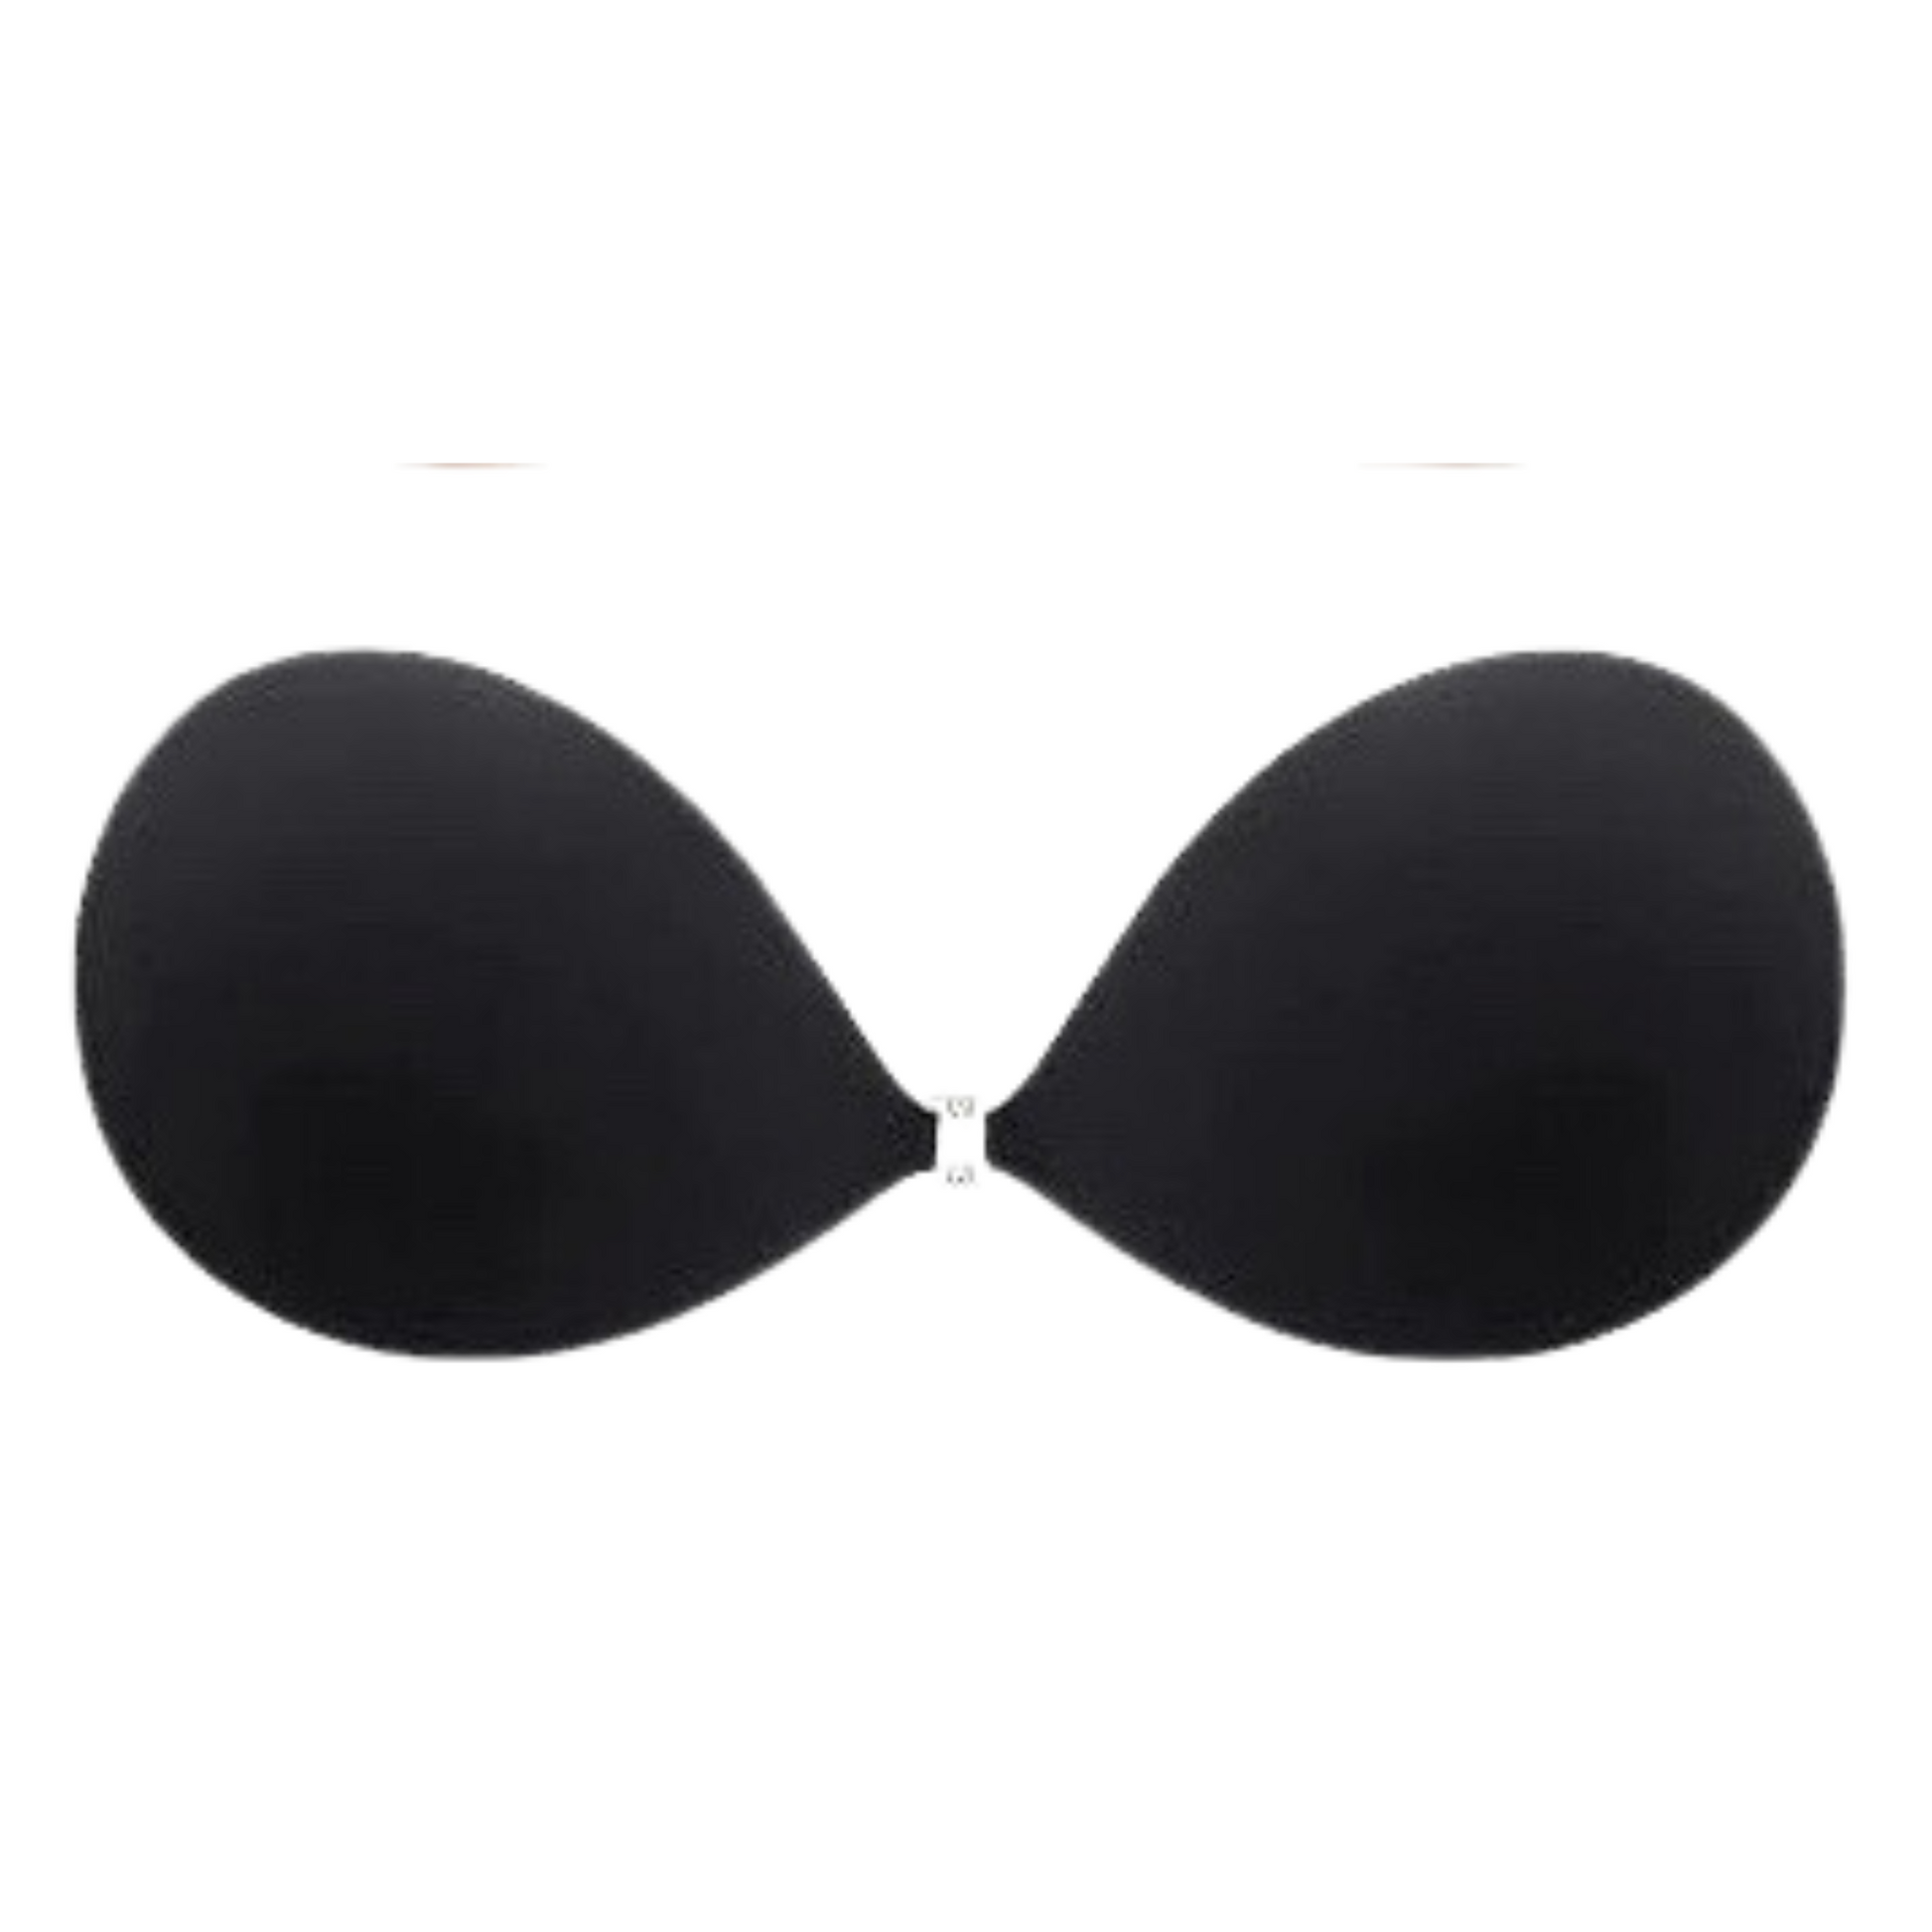 Cloth adhesive bra in black